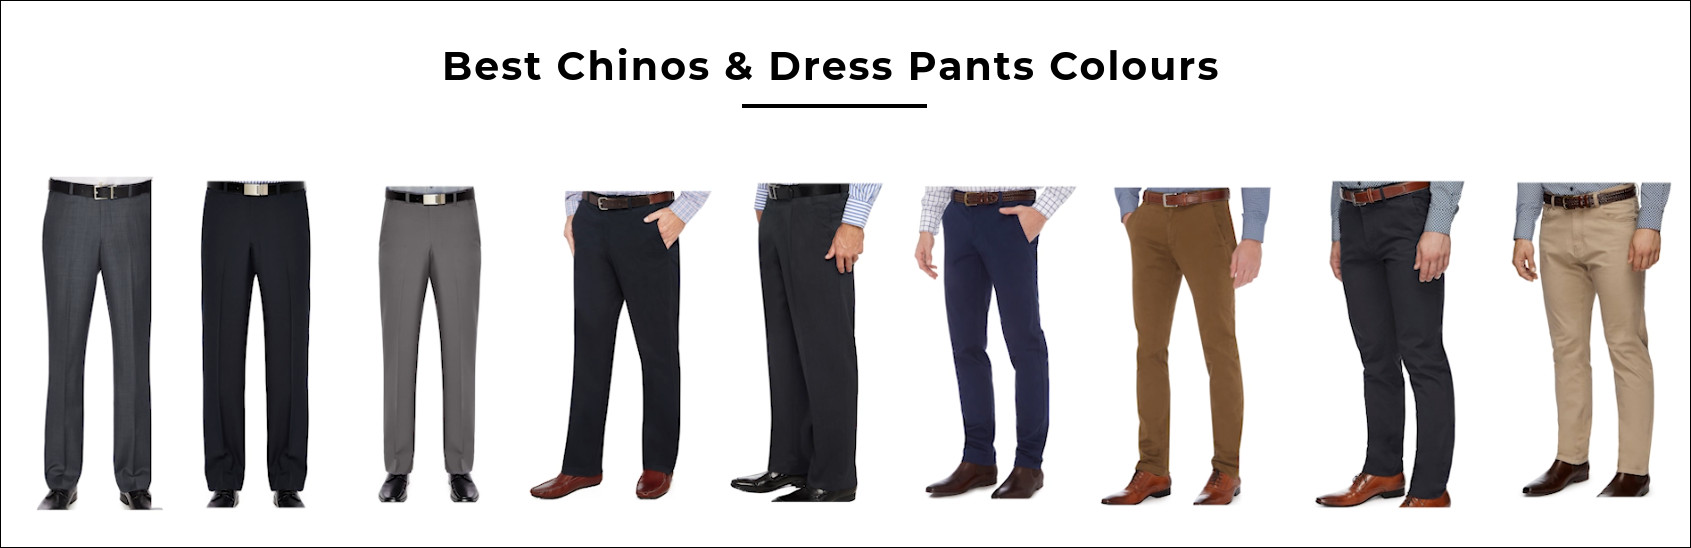 LINGHUI Men's Chino Trousers Chinos Cloth Trousers Chino Trousers Suit  Trousers Suit Men's Trousers Drainpipe Trousers sweatpants (Color : Noir,  Size : S) : Amazon.co.uk: Fashion